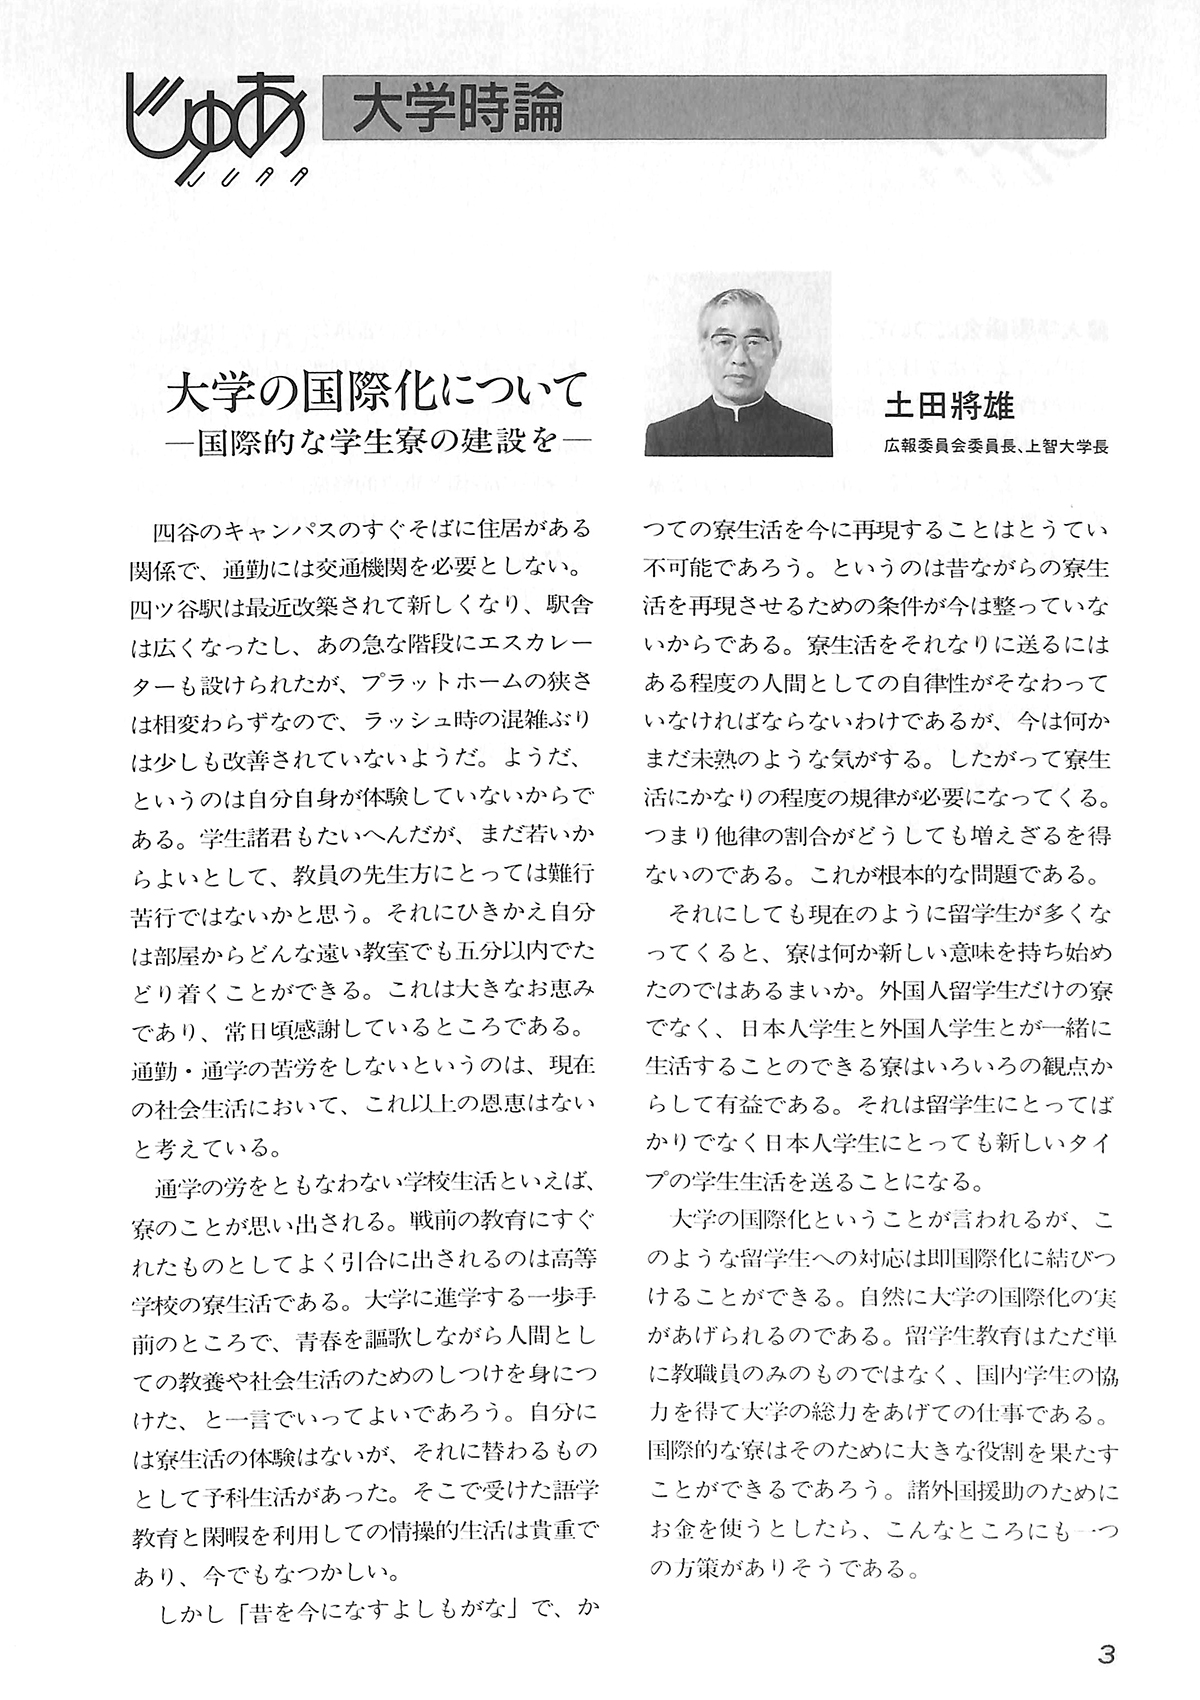 “A Suggestion Regarding the Internationalization of Universities in Japan” (September 1989) 